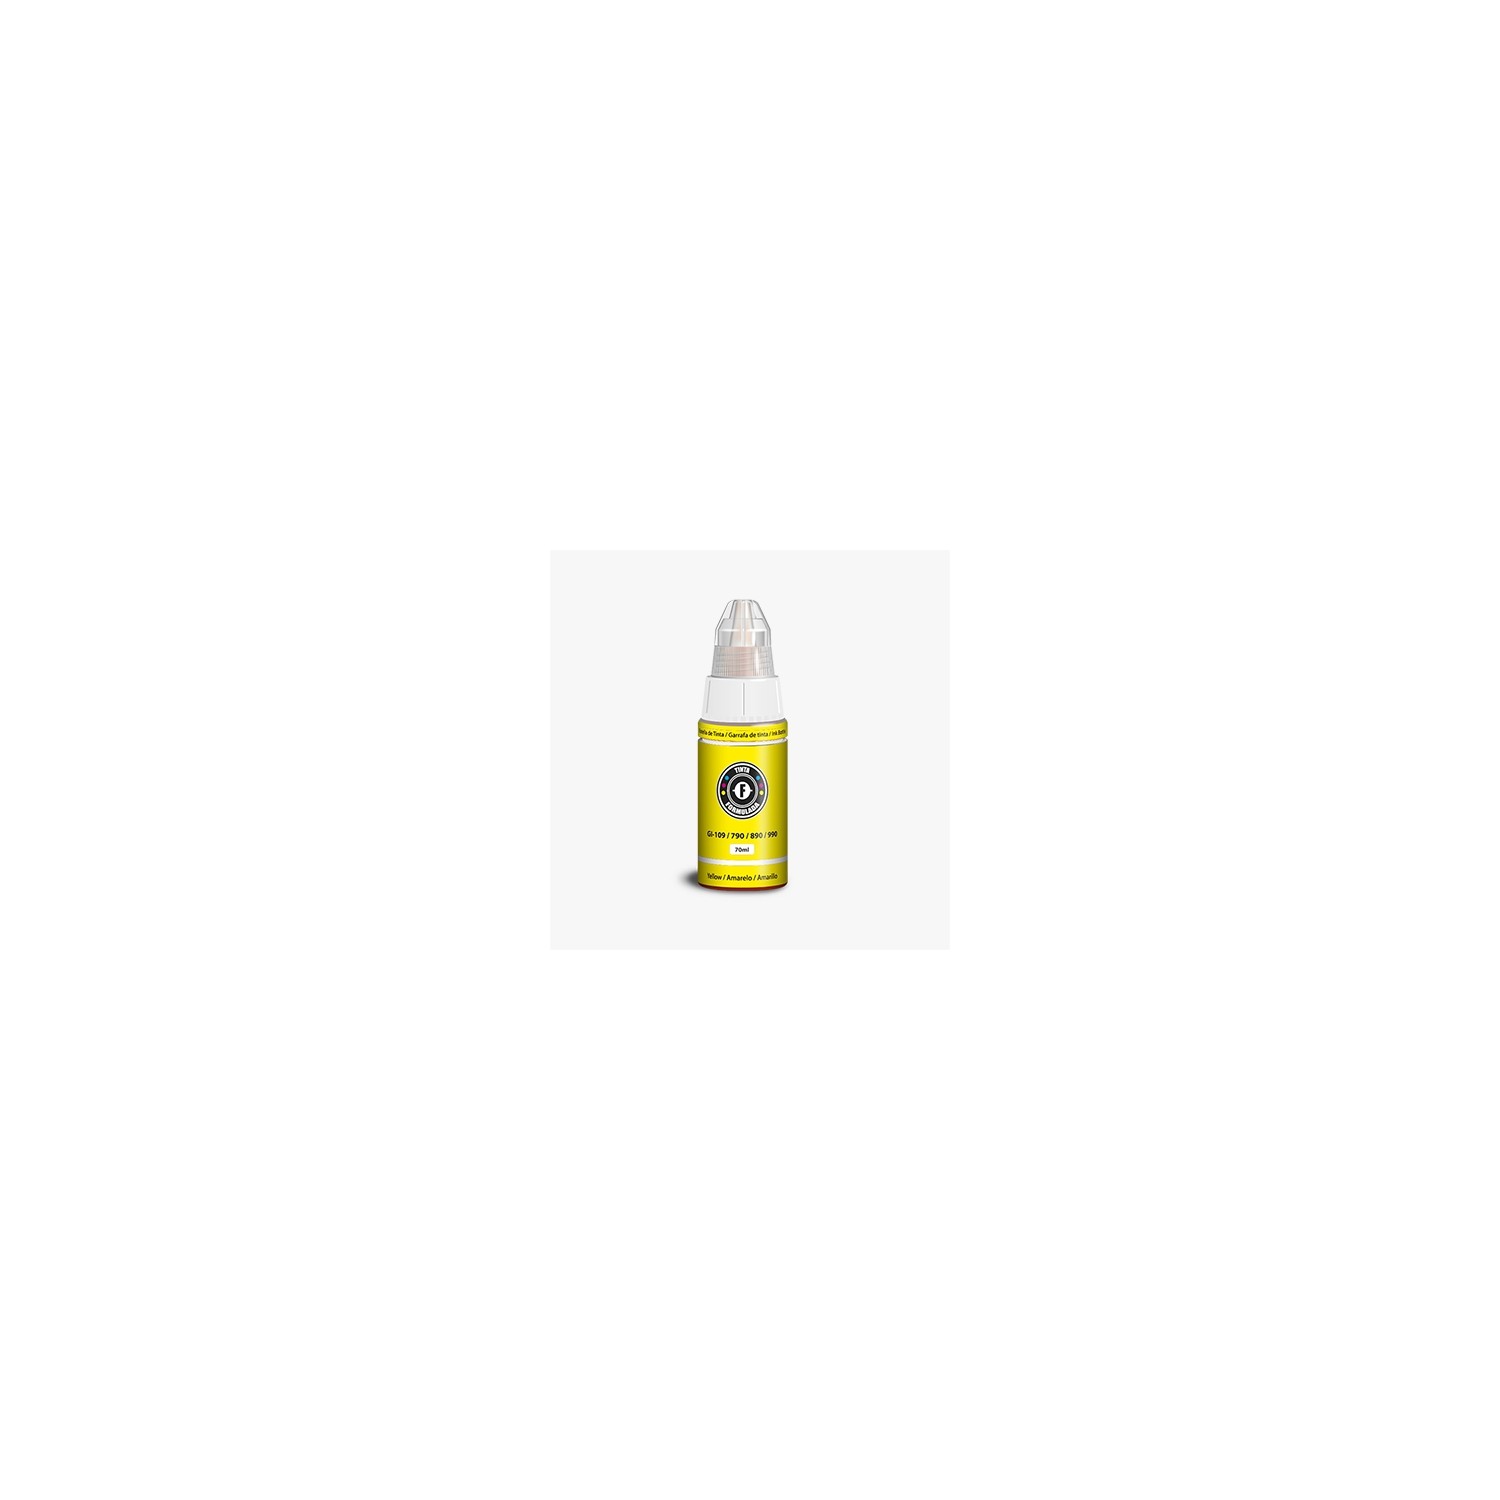 Tintas PREMIUN (Color Amarillo) 70 ml para EPSON L210, l355, l375 ...